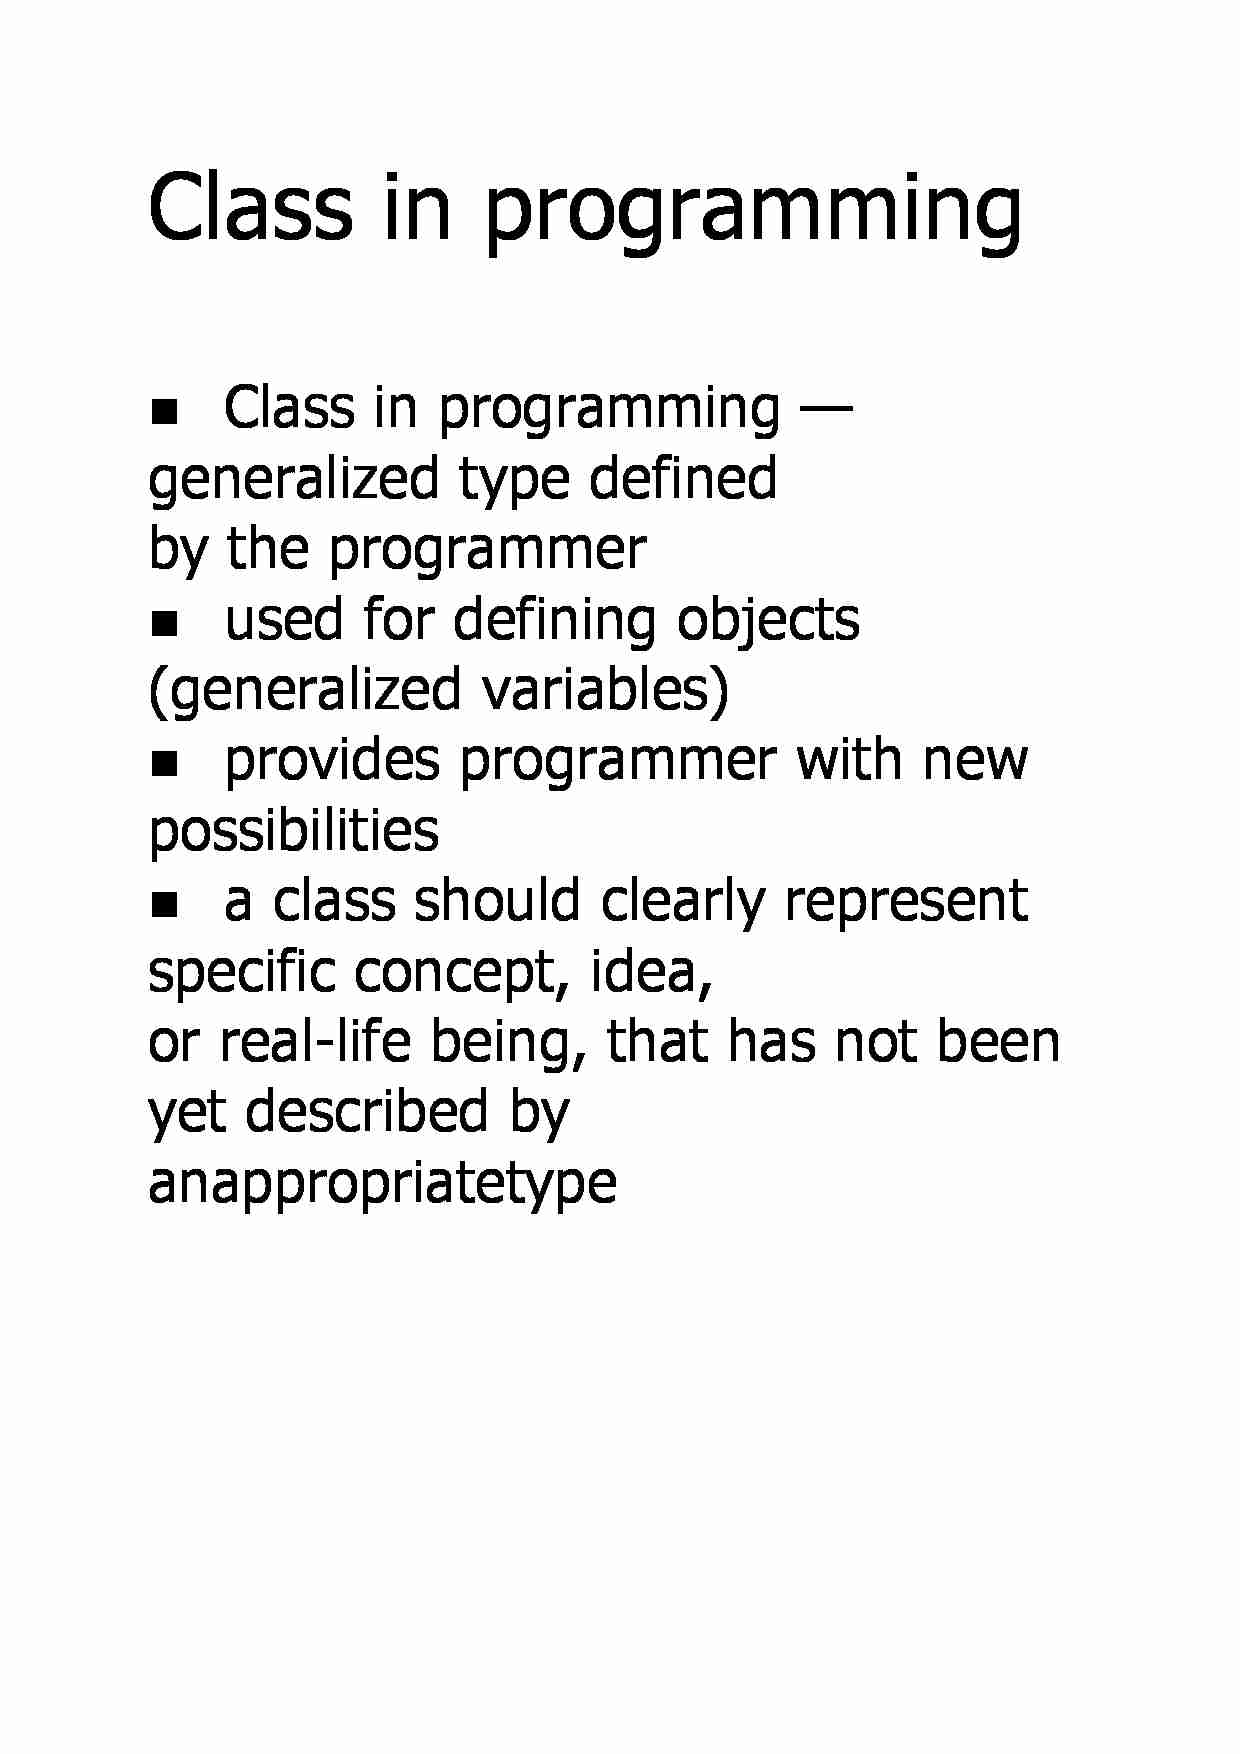 Class in programming - strona 1